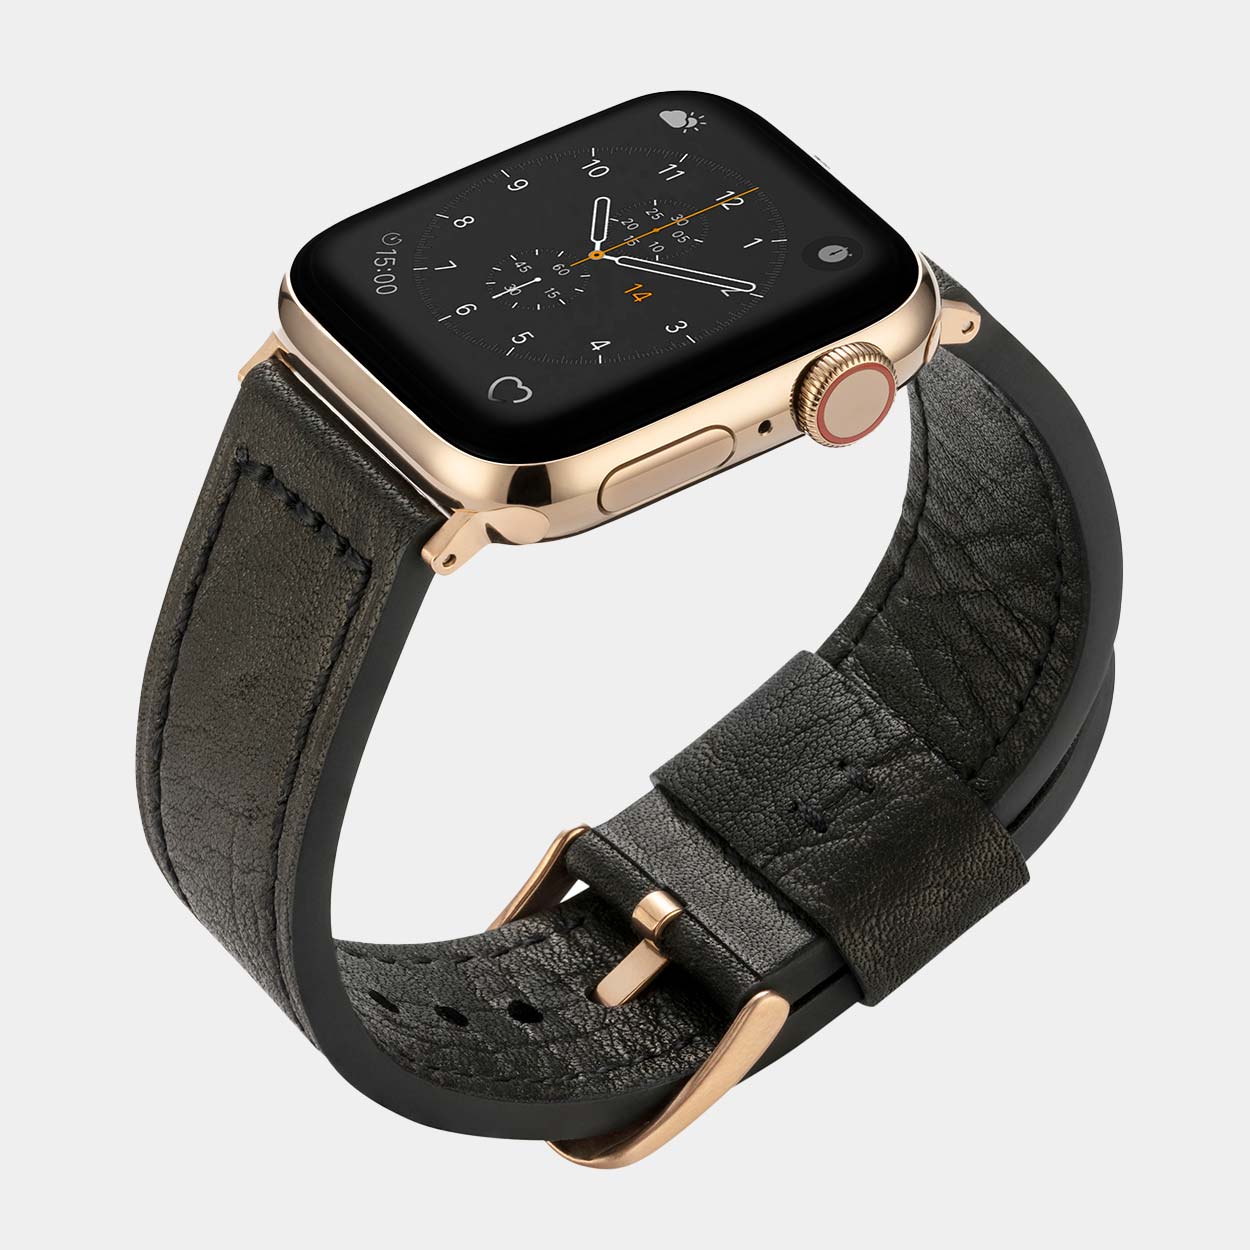 Pre-Loved Lond Apple Watch Straps - Black, Brown or Khaki - Buckle & Band - PL-LON-38-BLK-GL